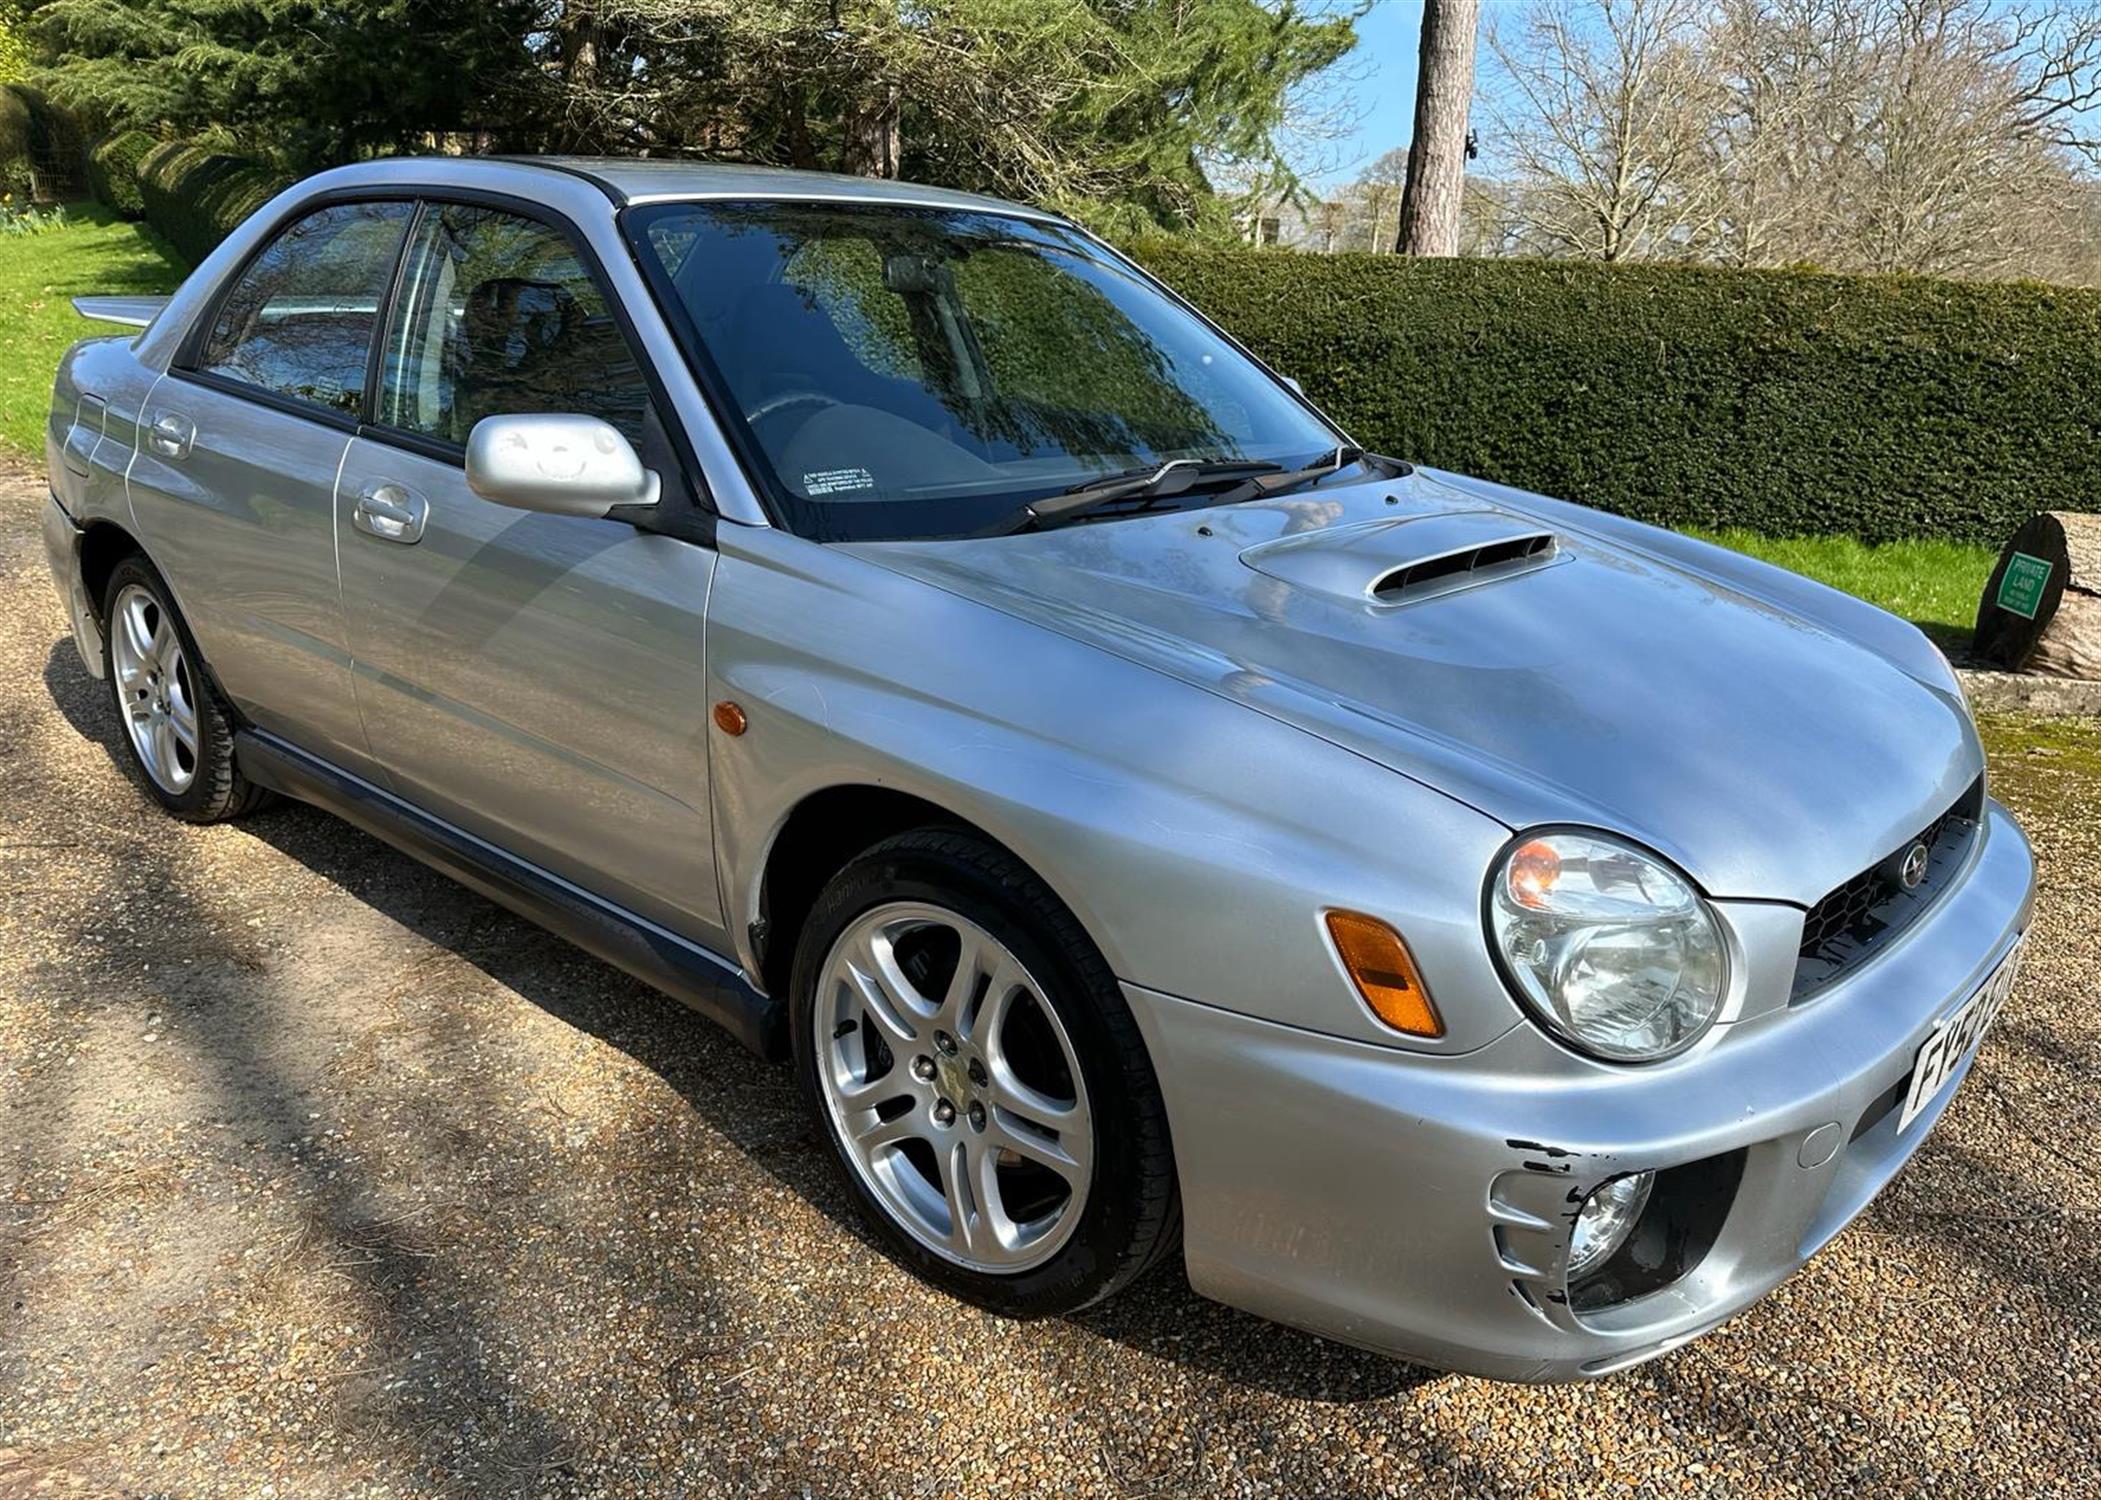 2002 Subaru Impreza 2.0 WRX AWD Turbo 4-dr Saloon. Registration: FY52 EUX. Finished in Silver.